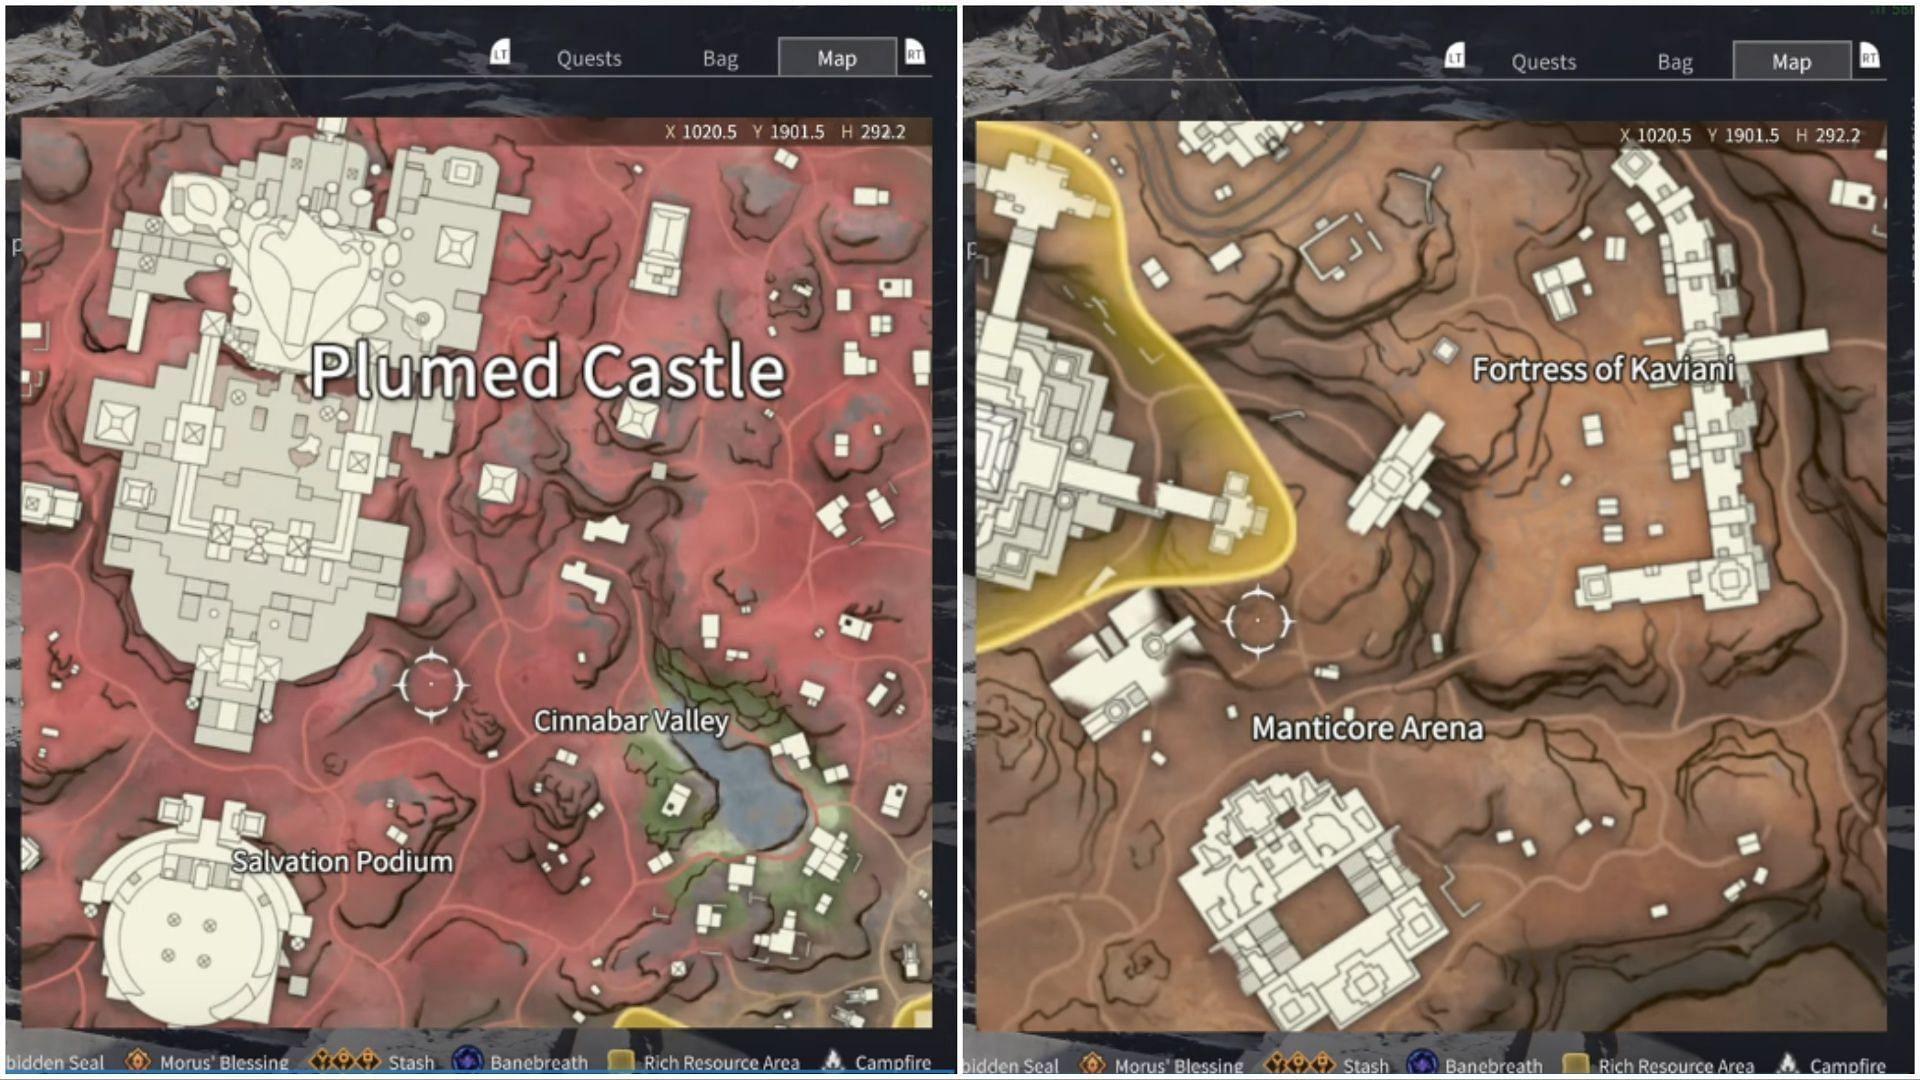 Plumed Castle and Mehtaab region (Image via NetEase Games Montreal)